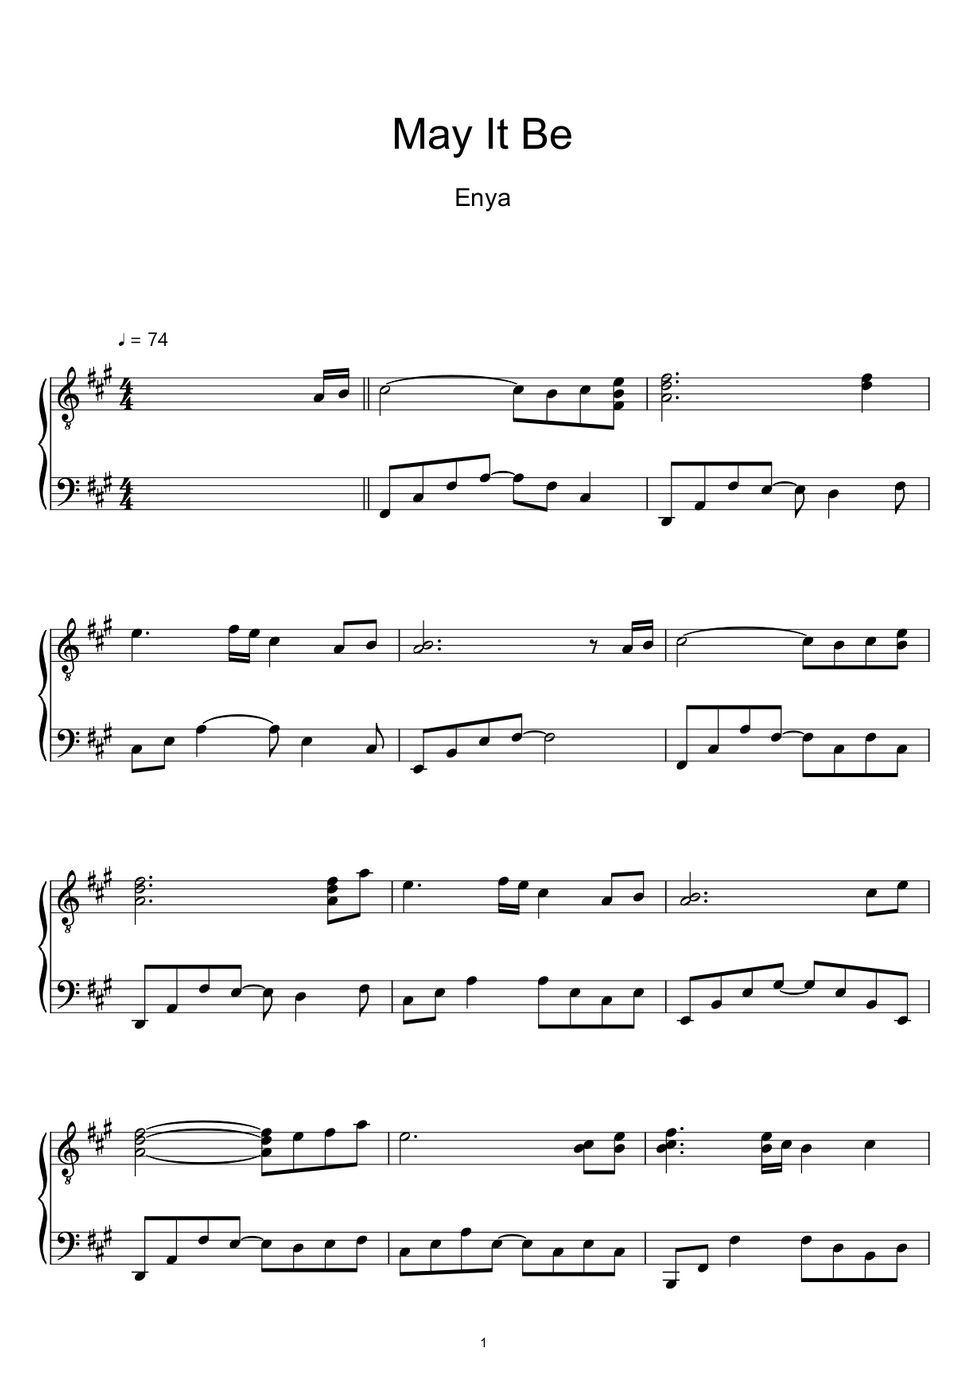 Enya - May It Be (The Lord of the Rings) (Sheet Music, MIDI,) by sayu